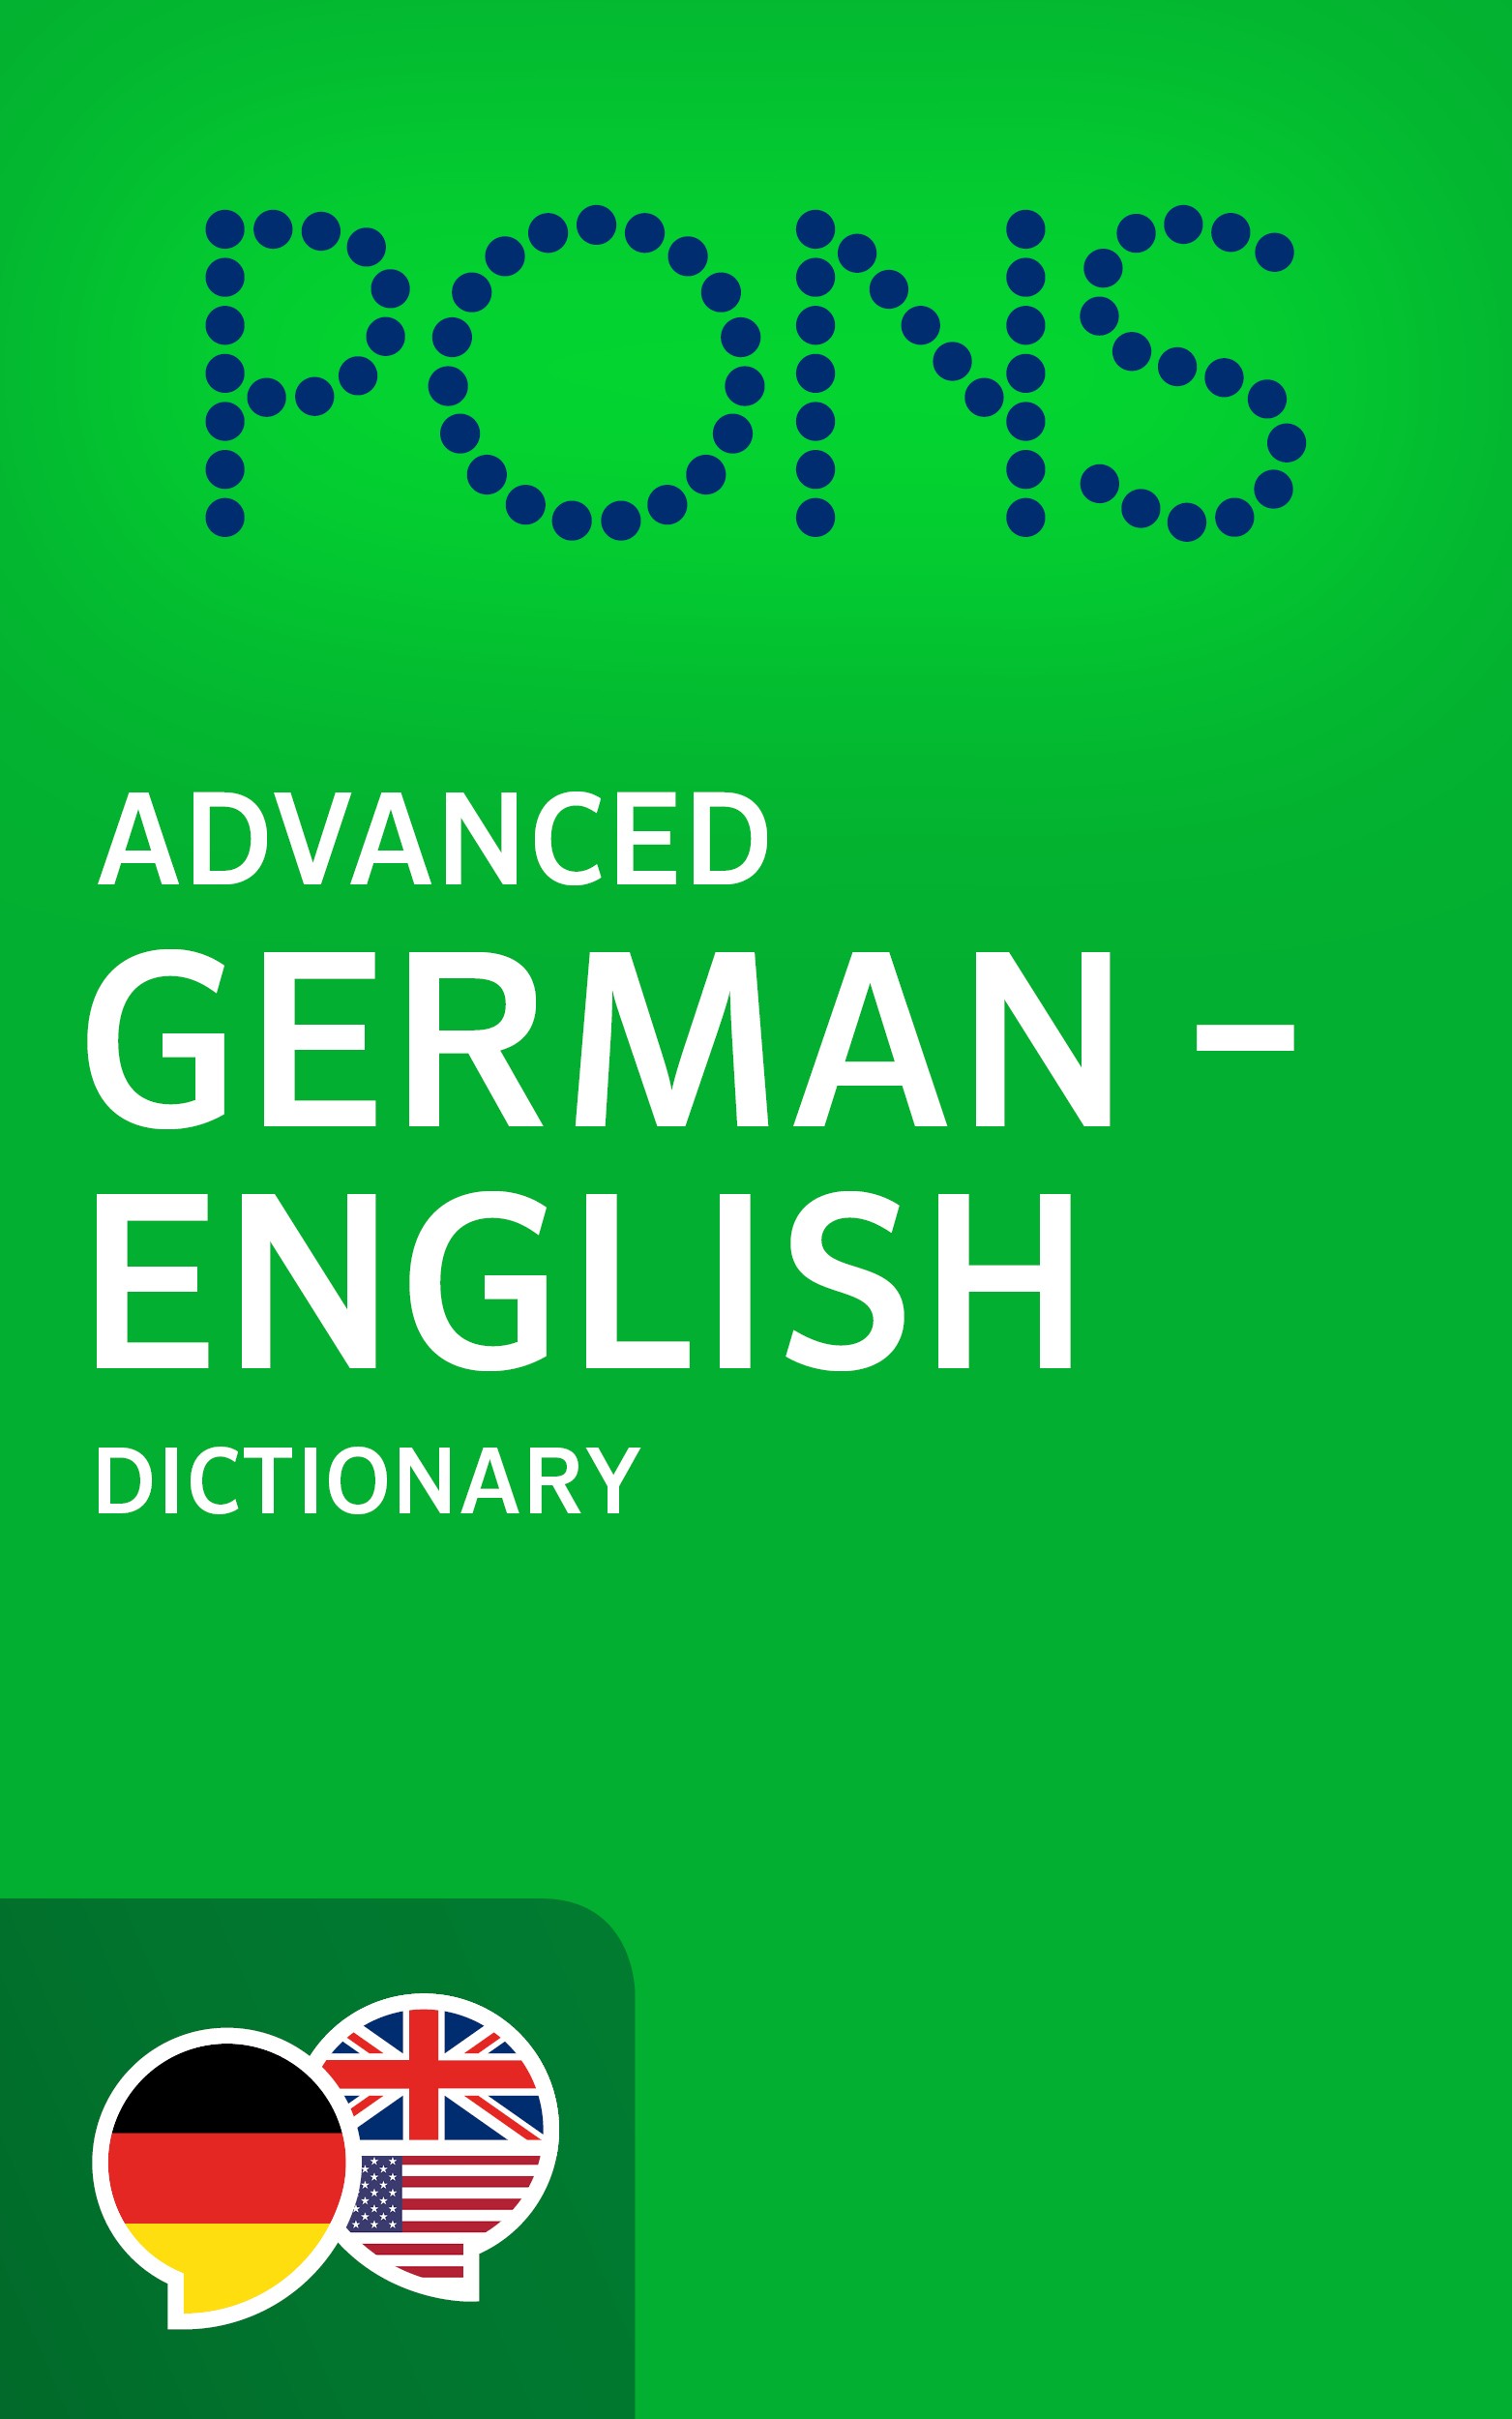 E-Book: PONS Advanced German -> English Dictionary